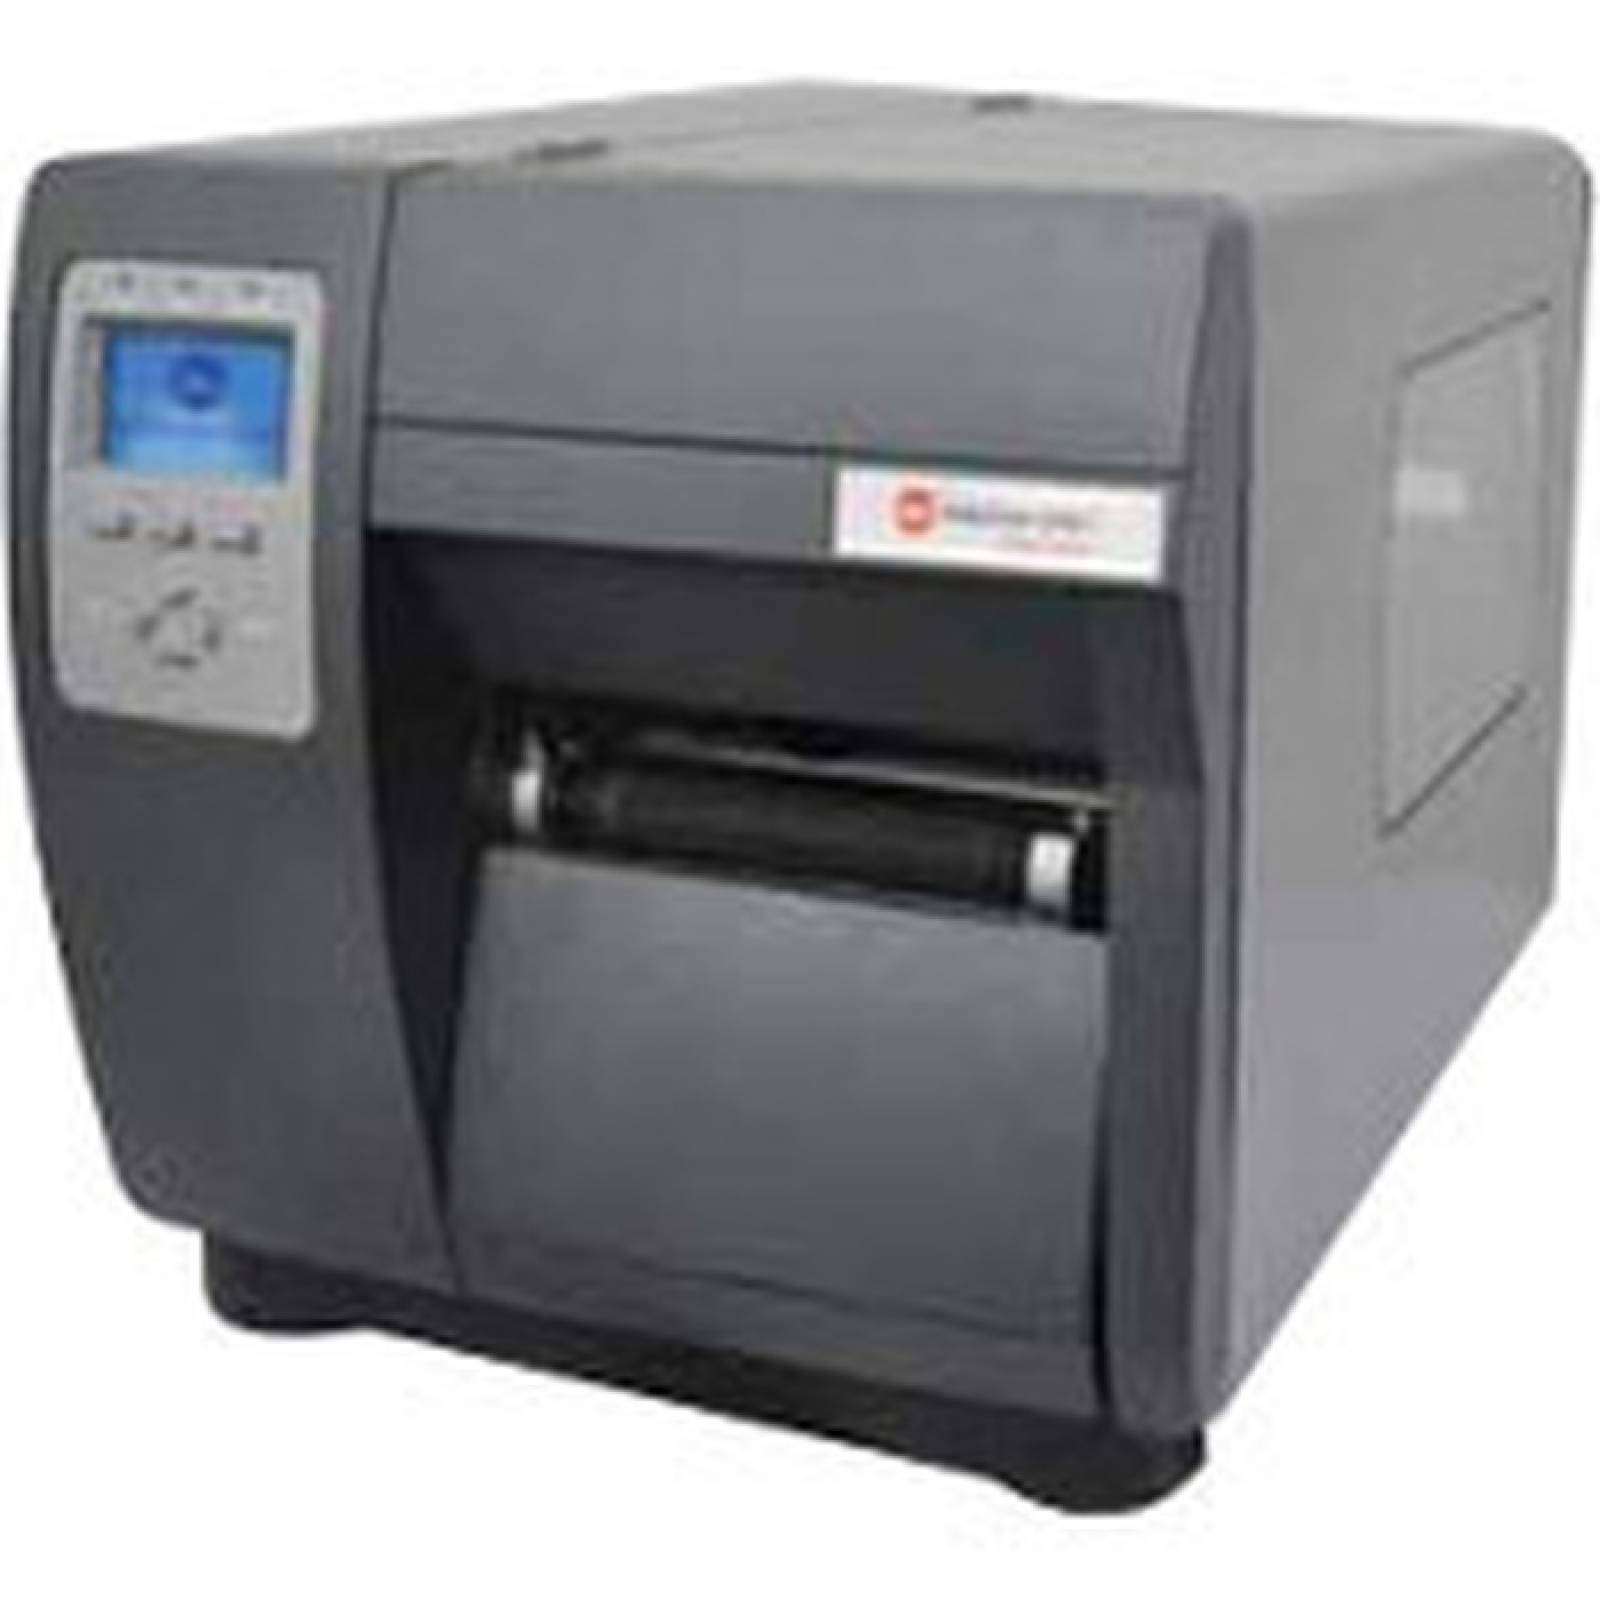 Impresora de transferencia trmica  trmica directa DatamaxO39Neil IClass I4212e  Monocromo  Escritorio  Impre